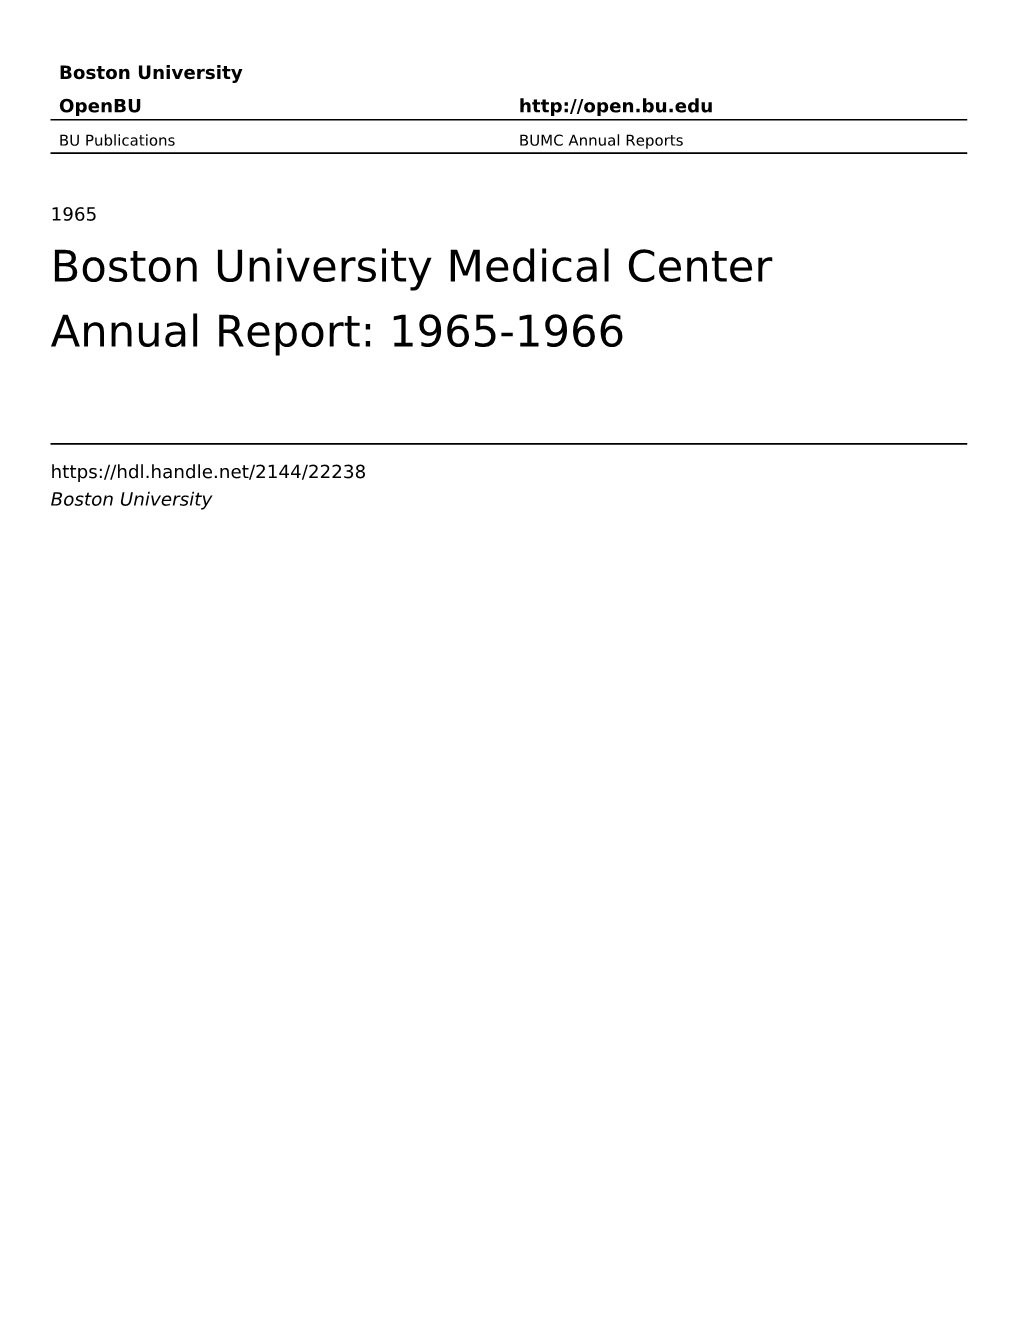 Boston University Medical Center Annual Report: 1965-1966